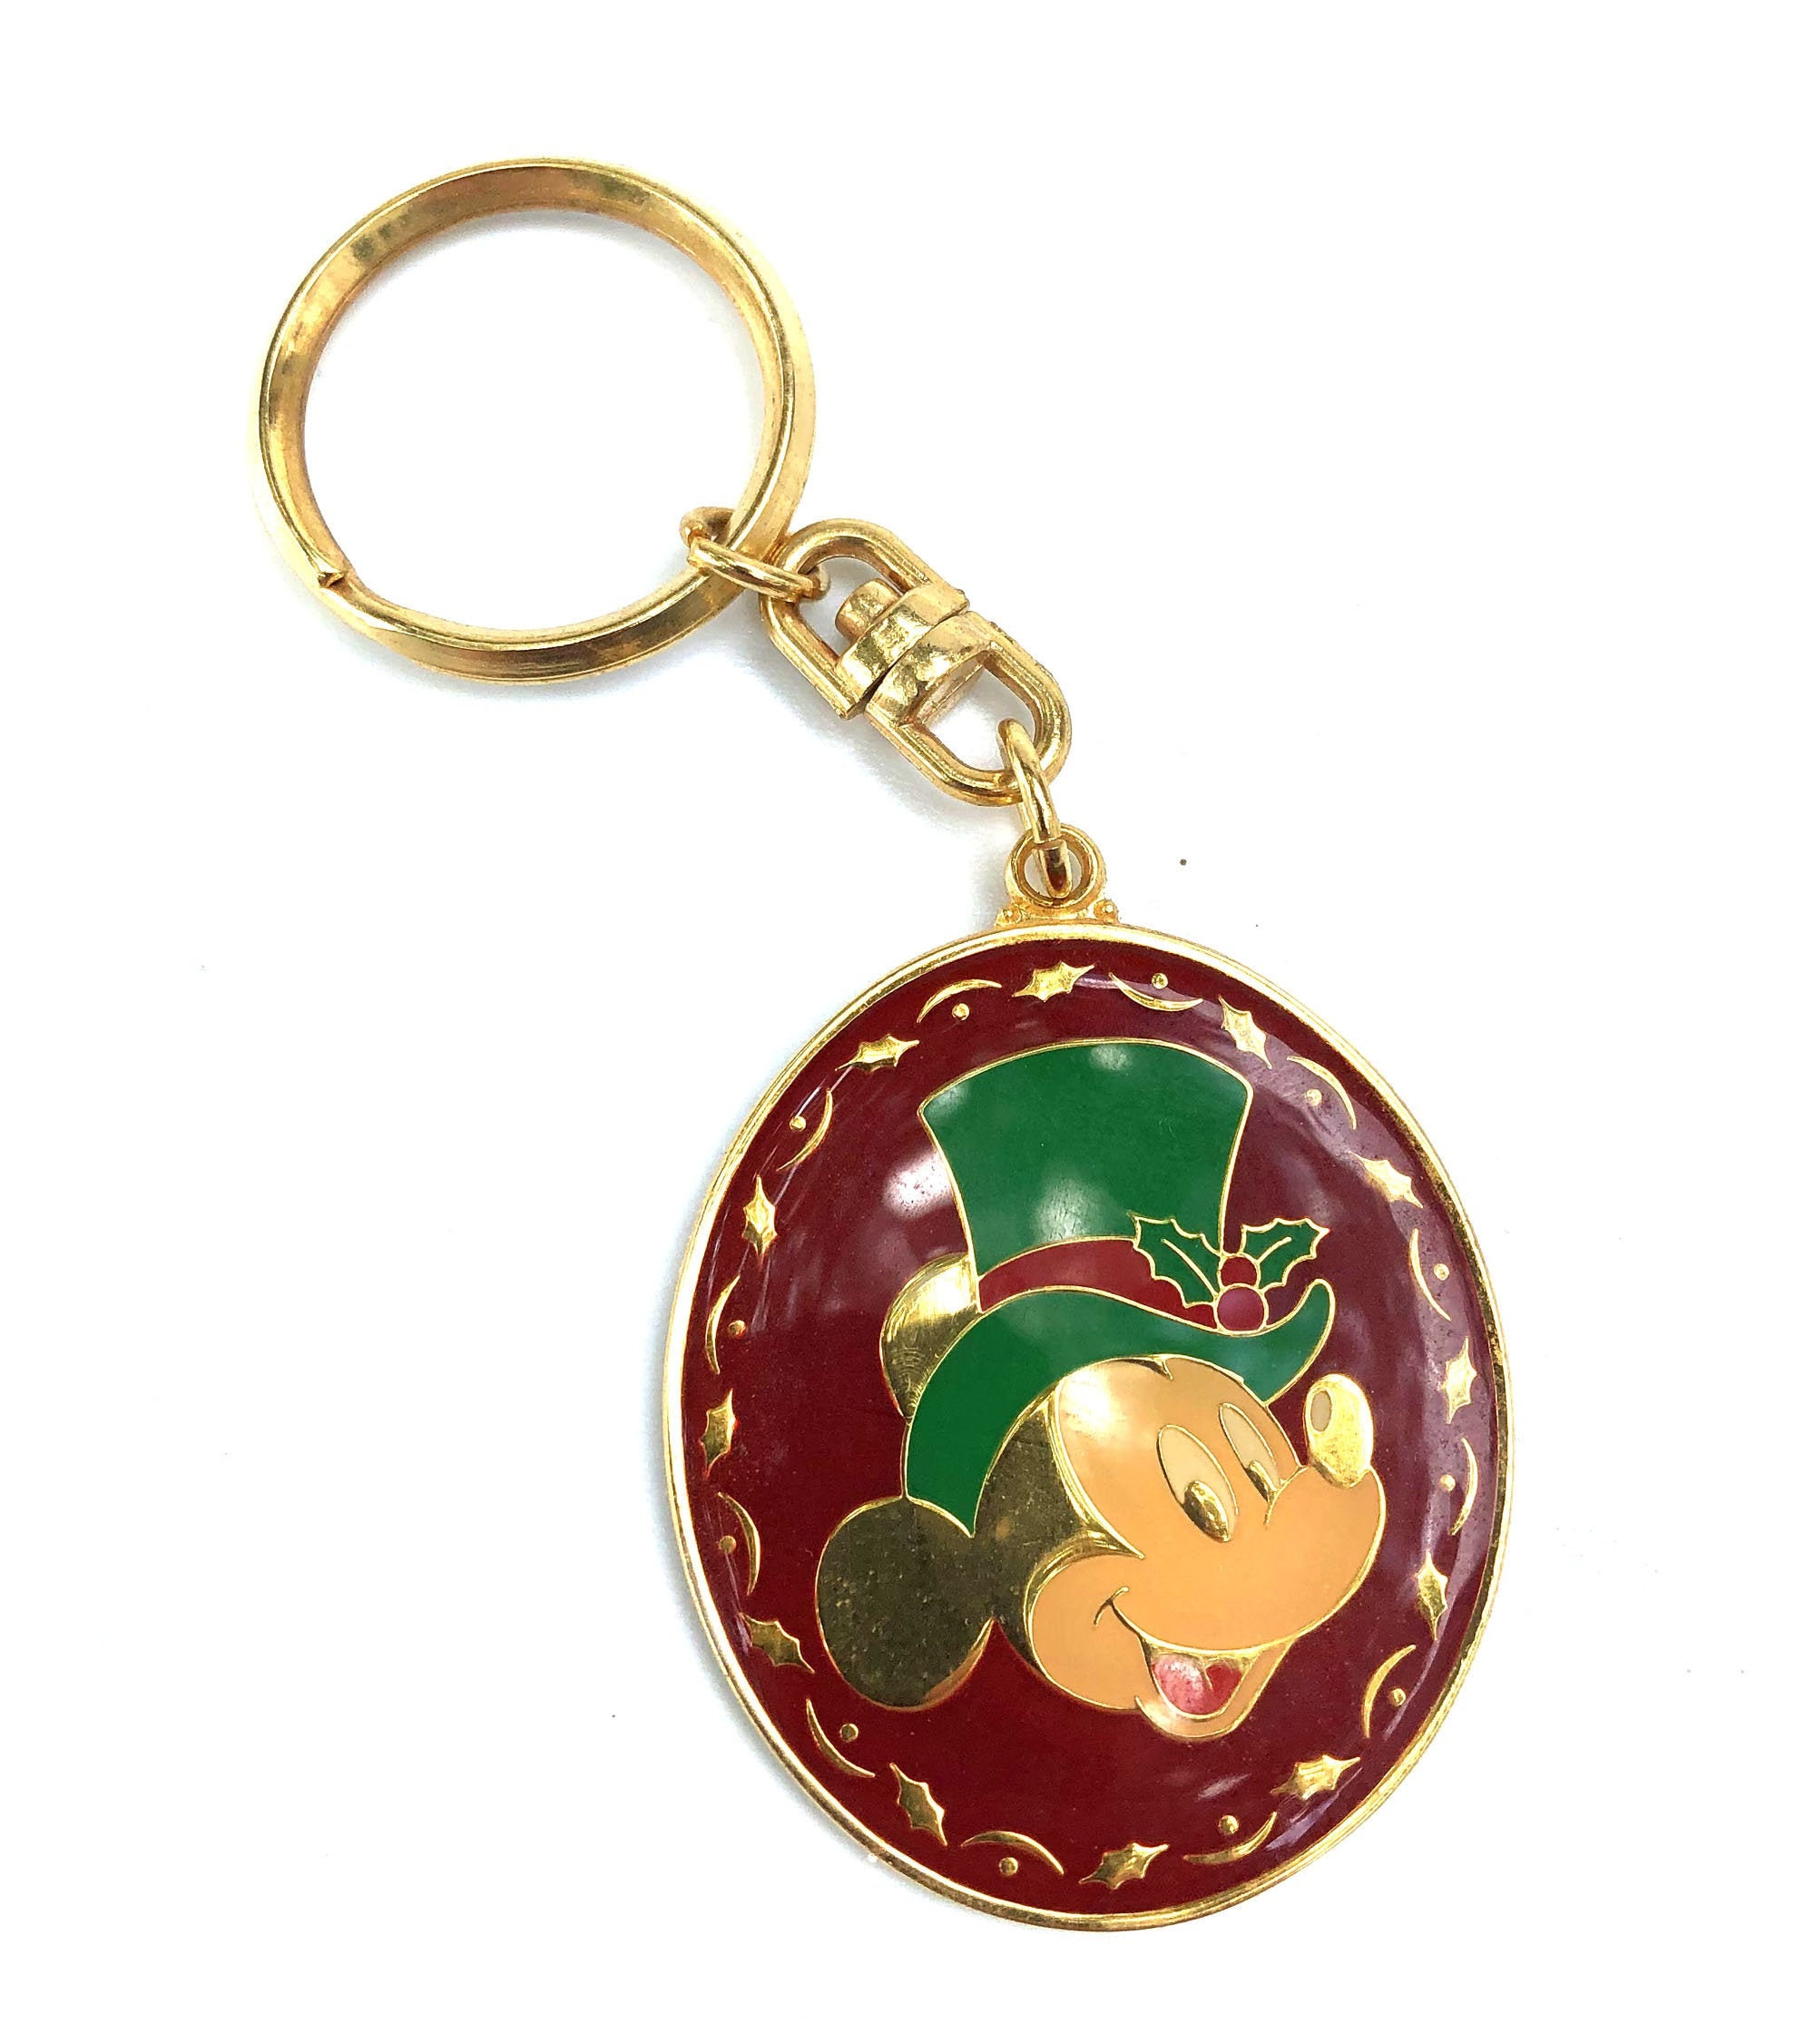 Tokyo Disneyland Club 33 Keychain Mickey Mouse Red Japan Version